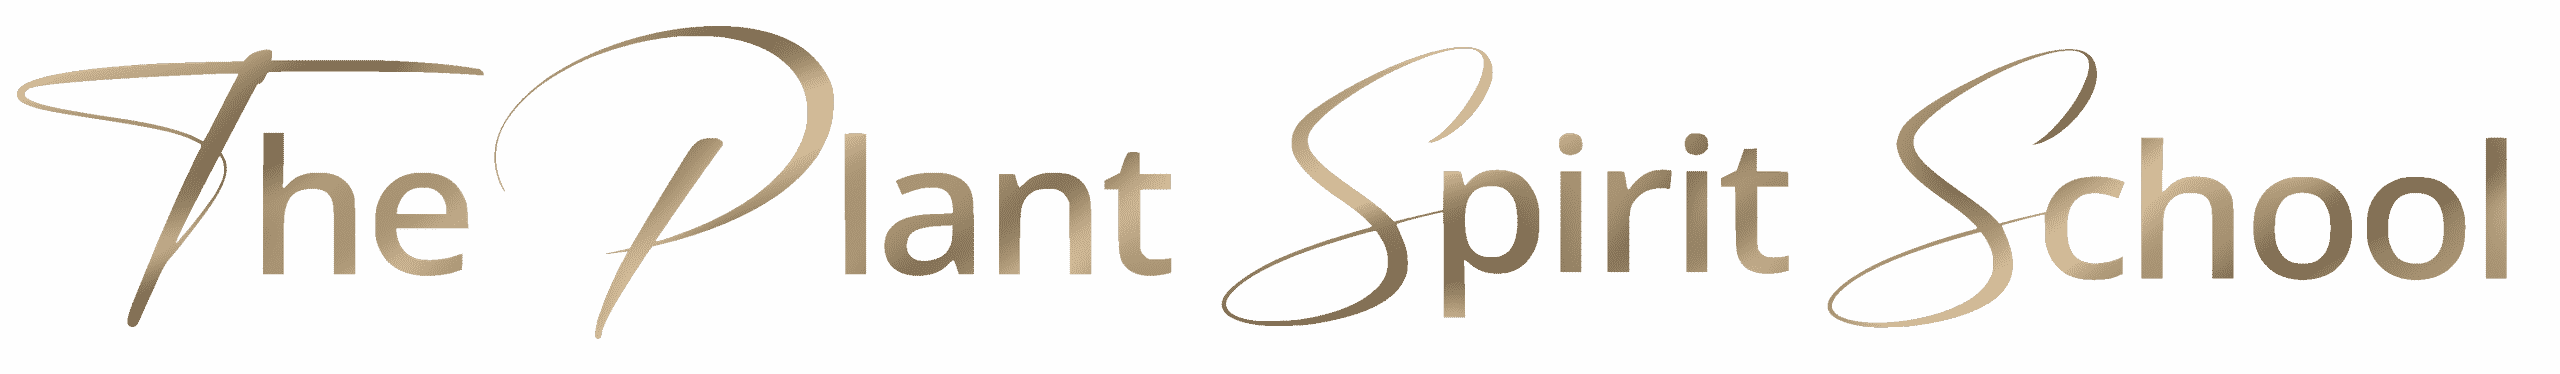 Plant Spirit School Logo dark gold